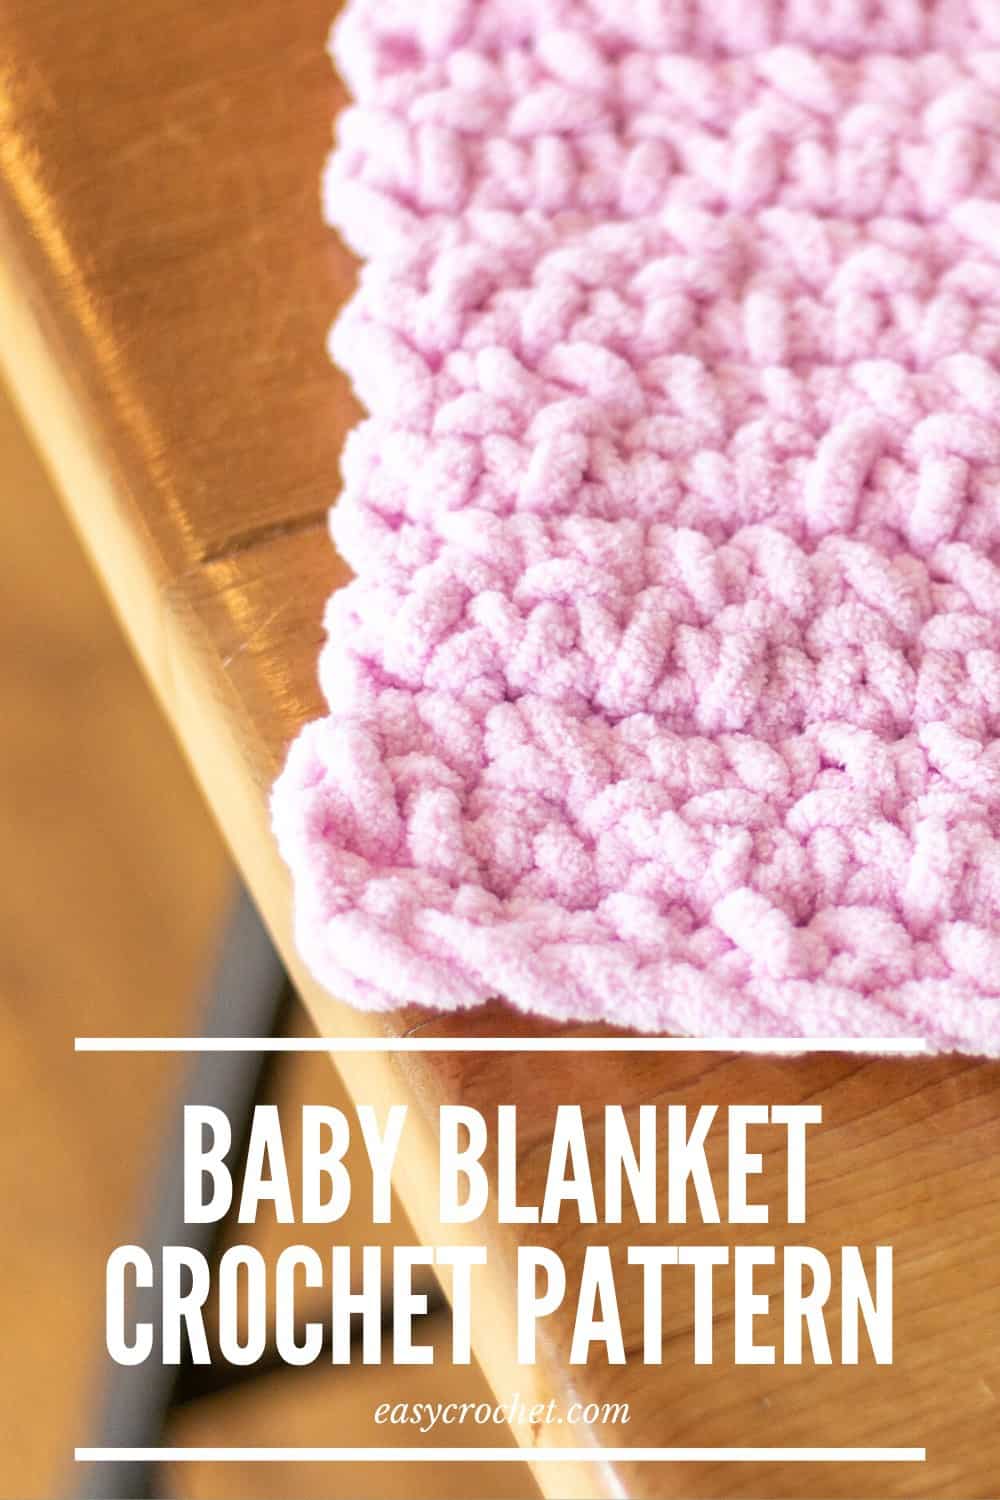 Easy Crochet Baby Blanket Pattern that is GREAT for beginners to make! via @easycrochetcom